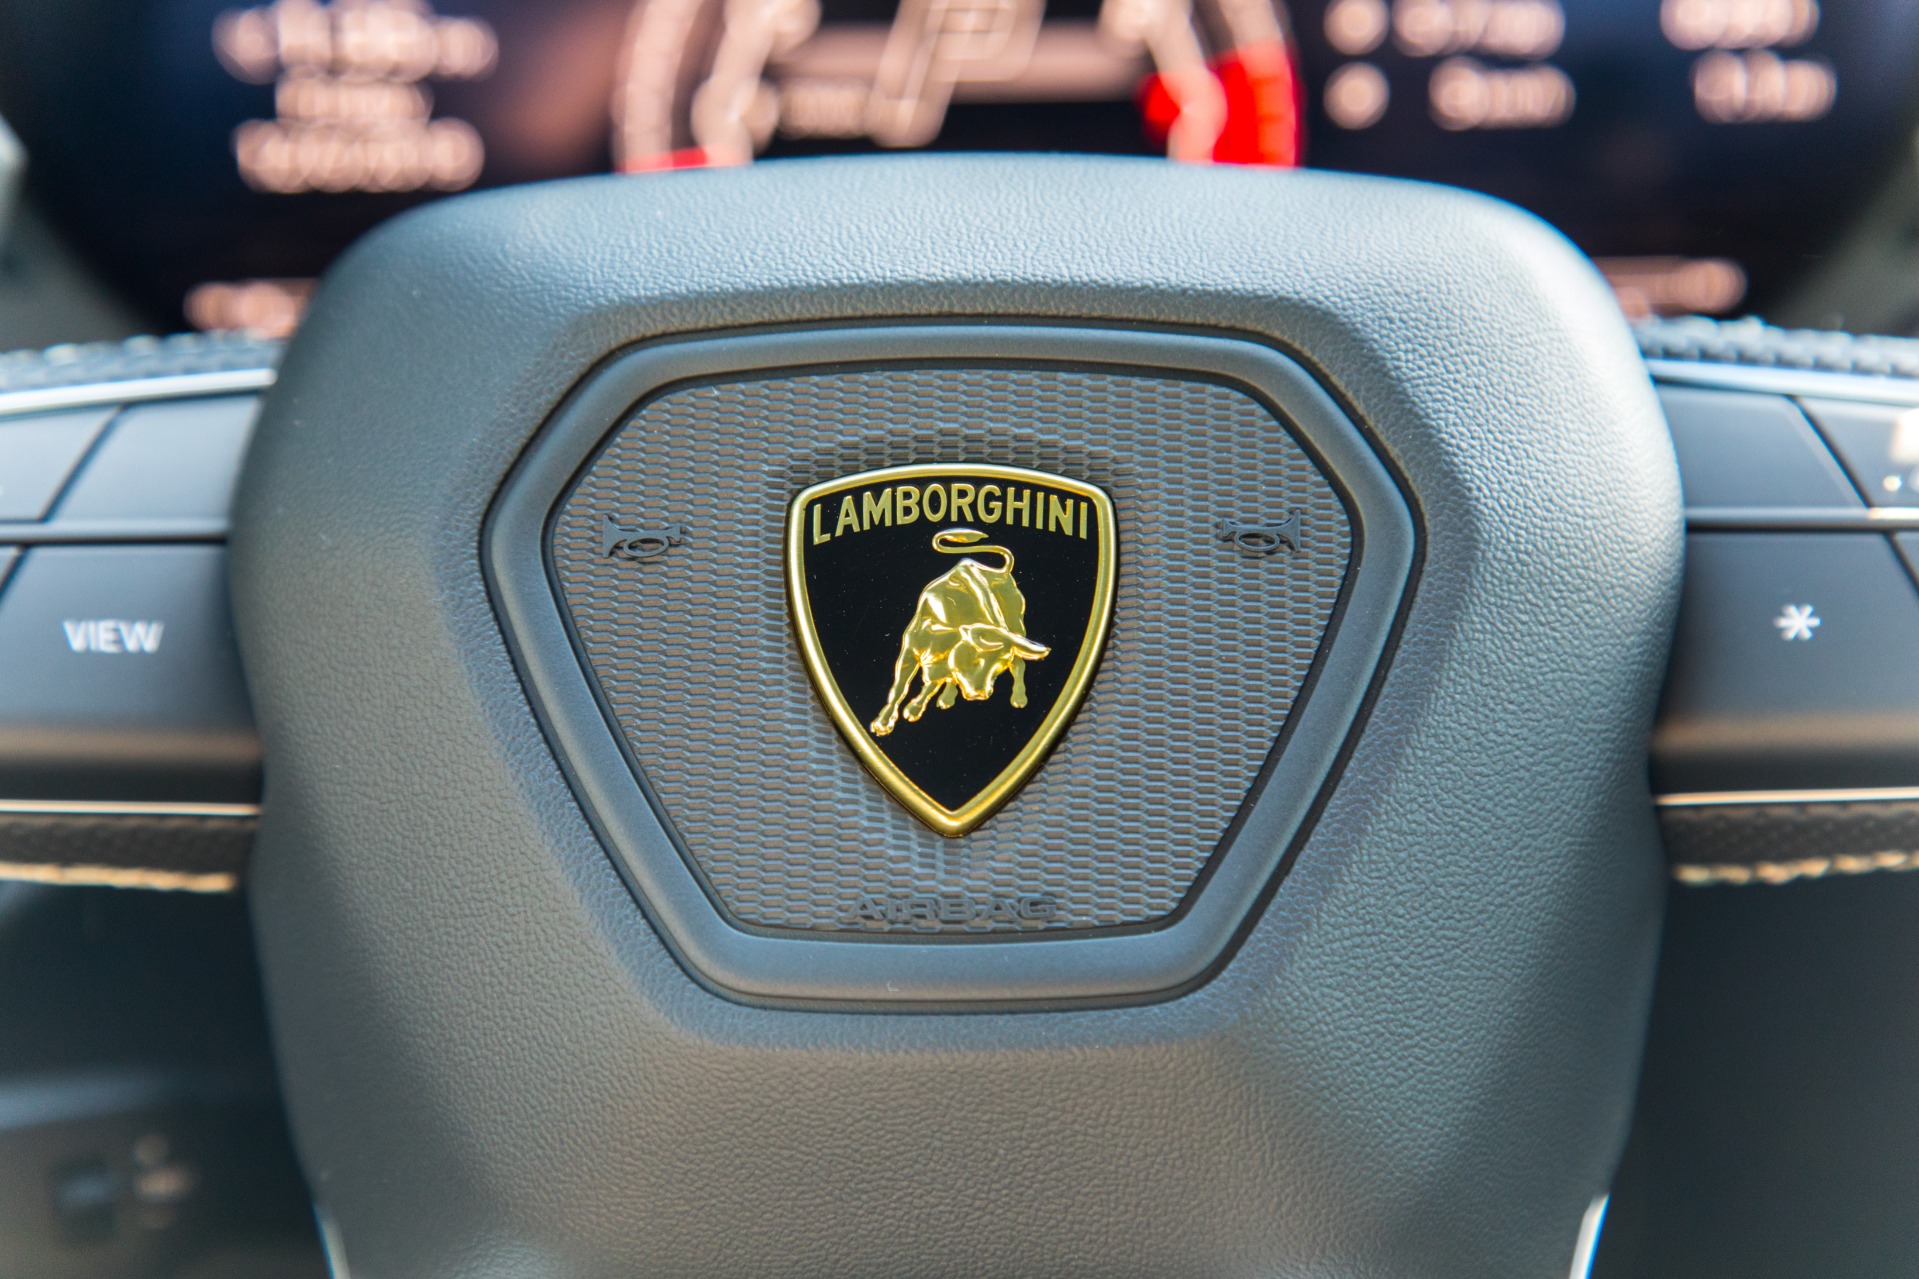 Used 2020 Lamborghini Urus For Sale ($237,900) | Marino Performance Motors  Stock #A06968